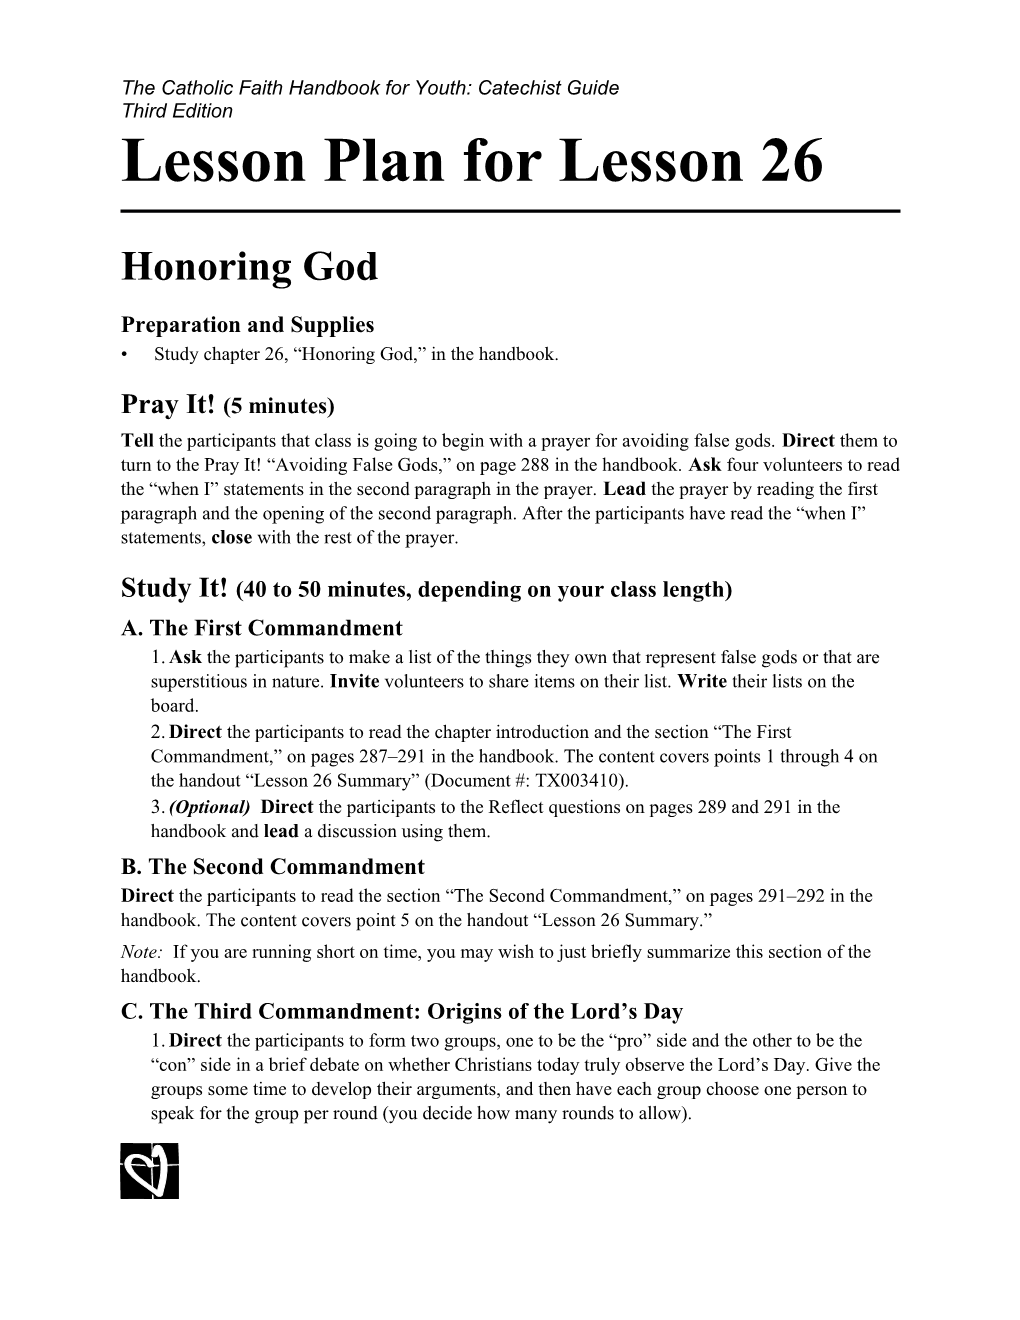 Lesson Plan for Lesson 26